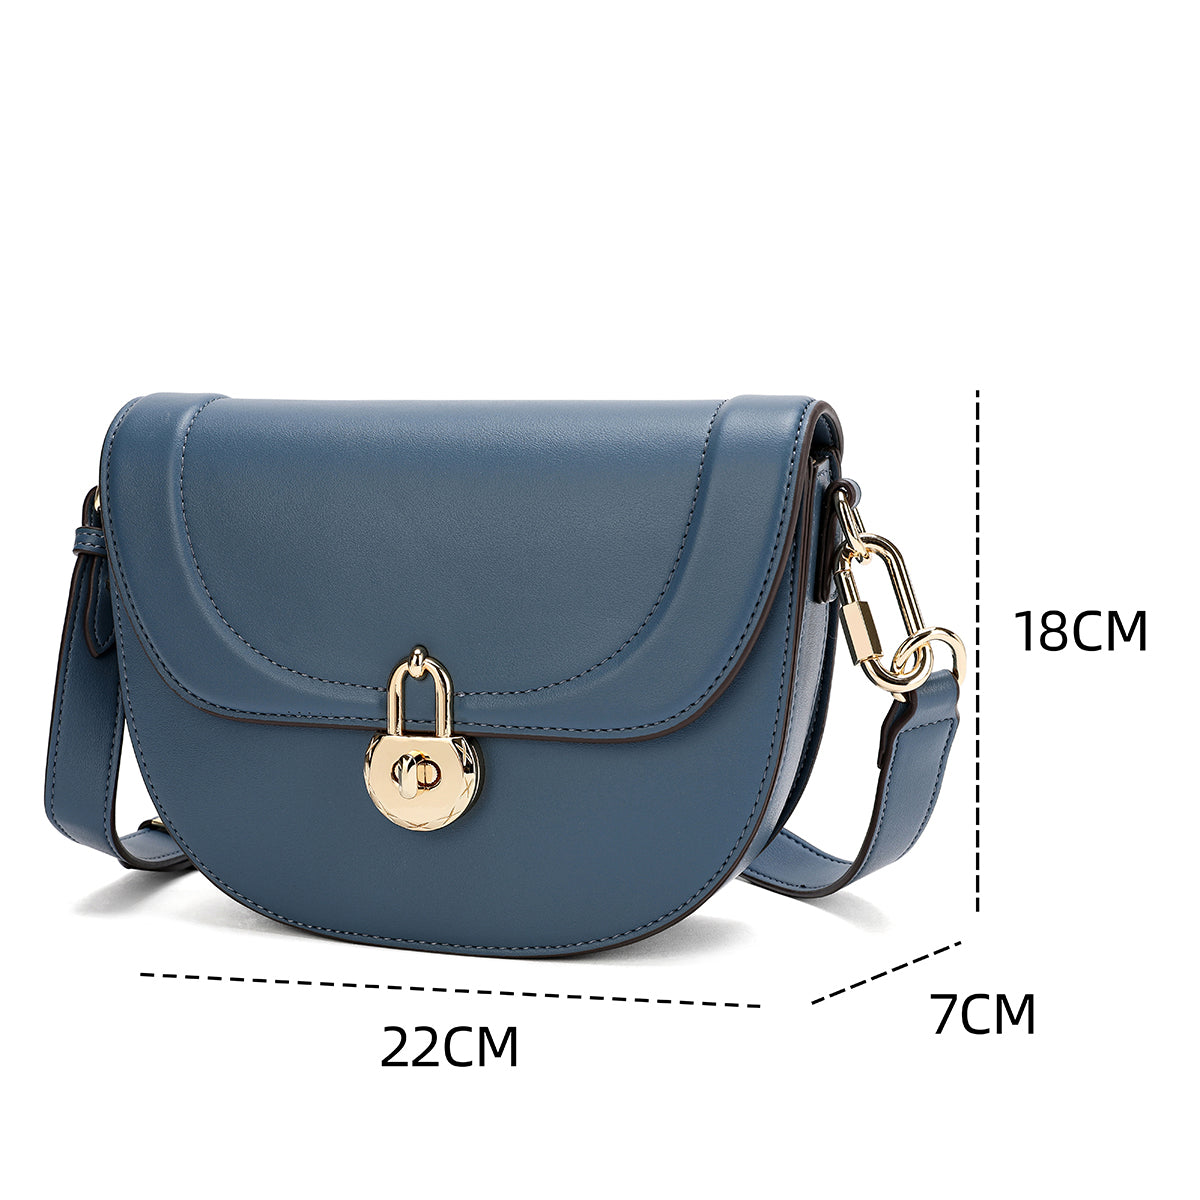 Elegant crossbody bag for women by Saga, width 22 cm, color blue or maroon